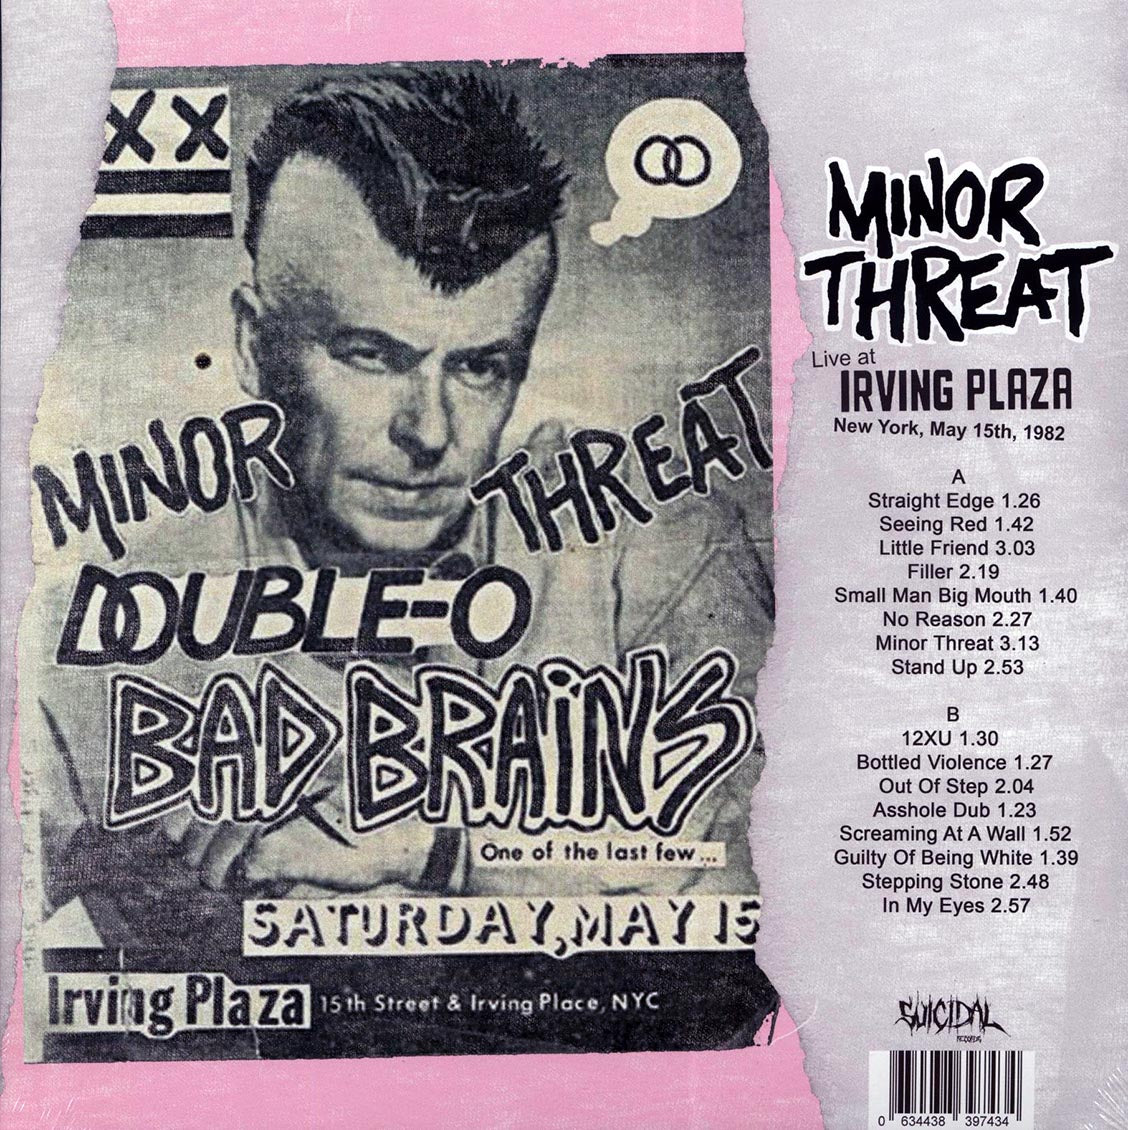 Minor Threat - Live At Irving Plaza New York, May 15th, 1982 (ltd. 300 copies made) (white vinyl) - Vinyl LP, LP